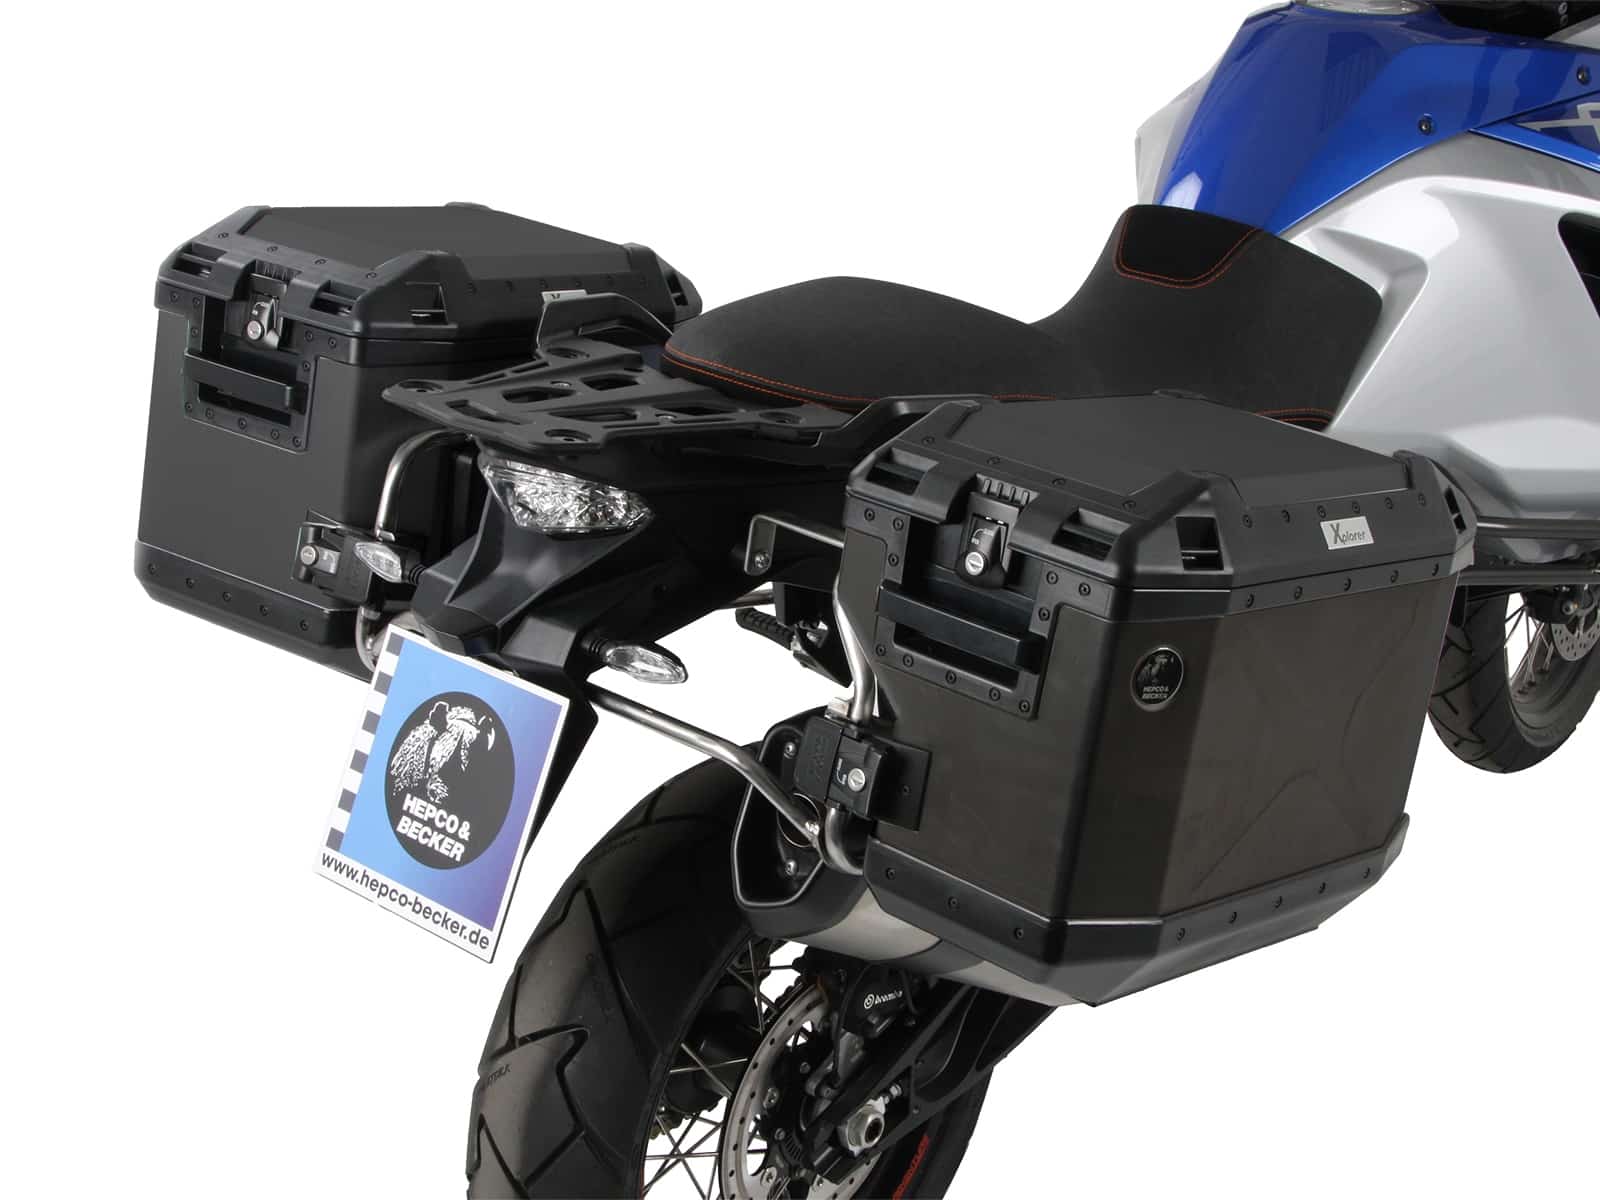 Kofferträgerset Cutout Edelstahlträger inkl. Xplorer schwarz Kofferset für KTM 1050/1190/ Adventure/R (2013-)